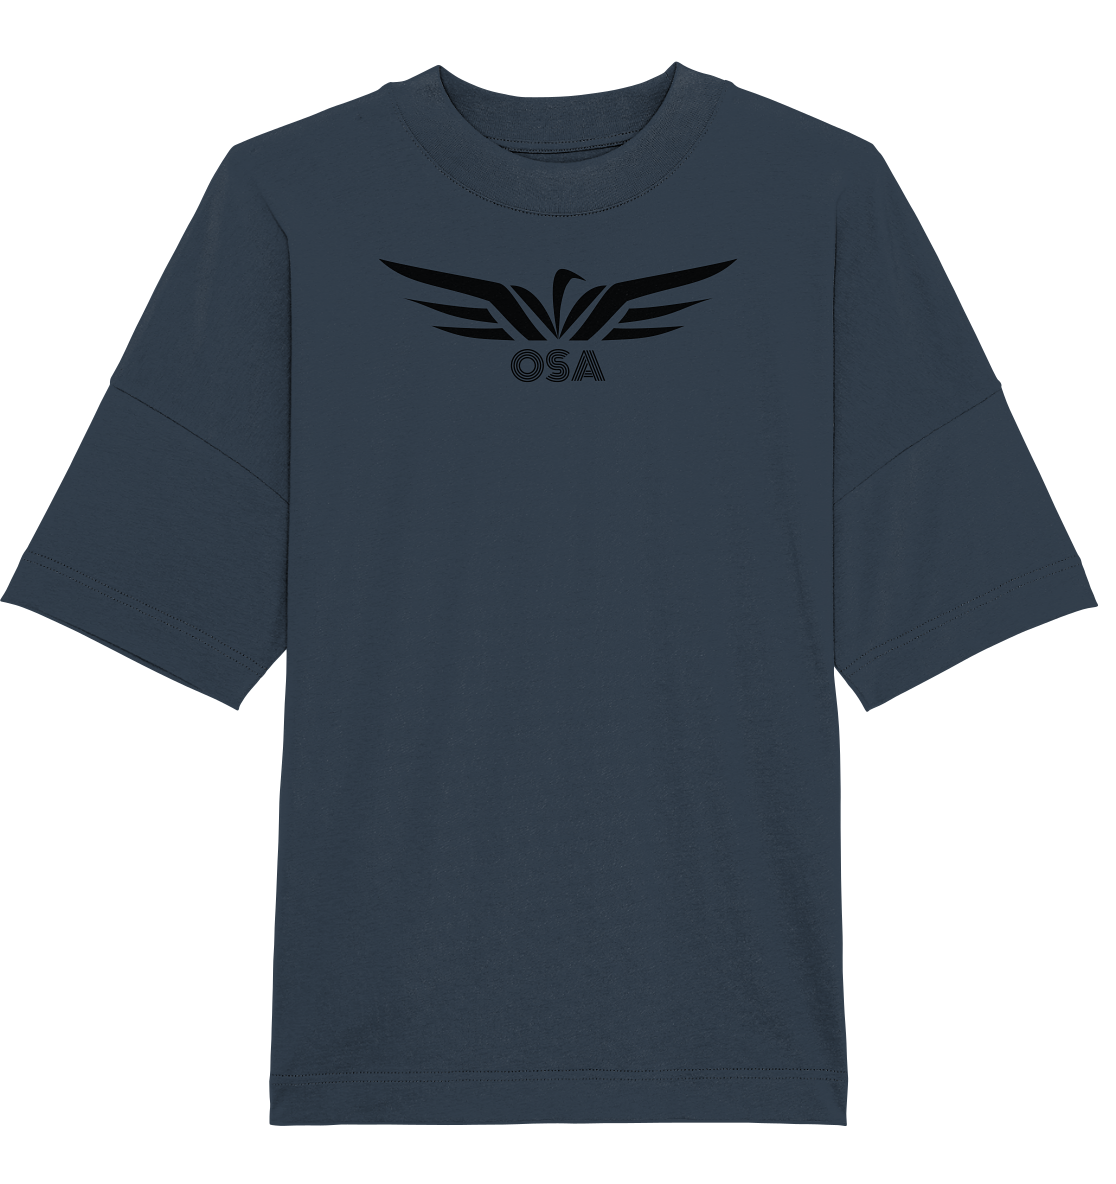 OSA - T shirt "ROCCE" - Organic Oversize Shirt